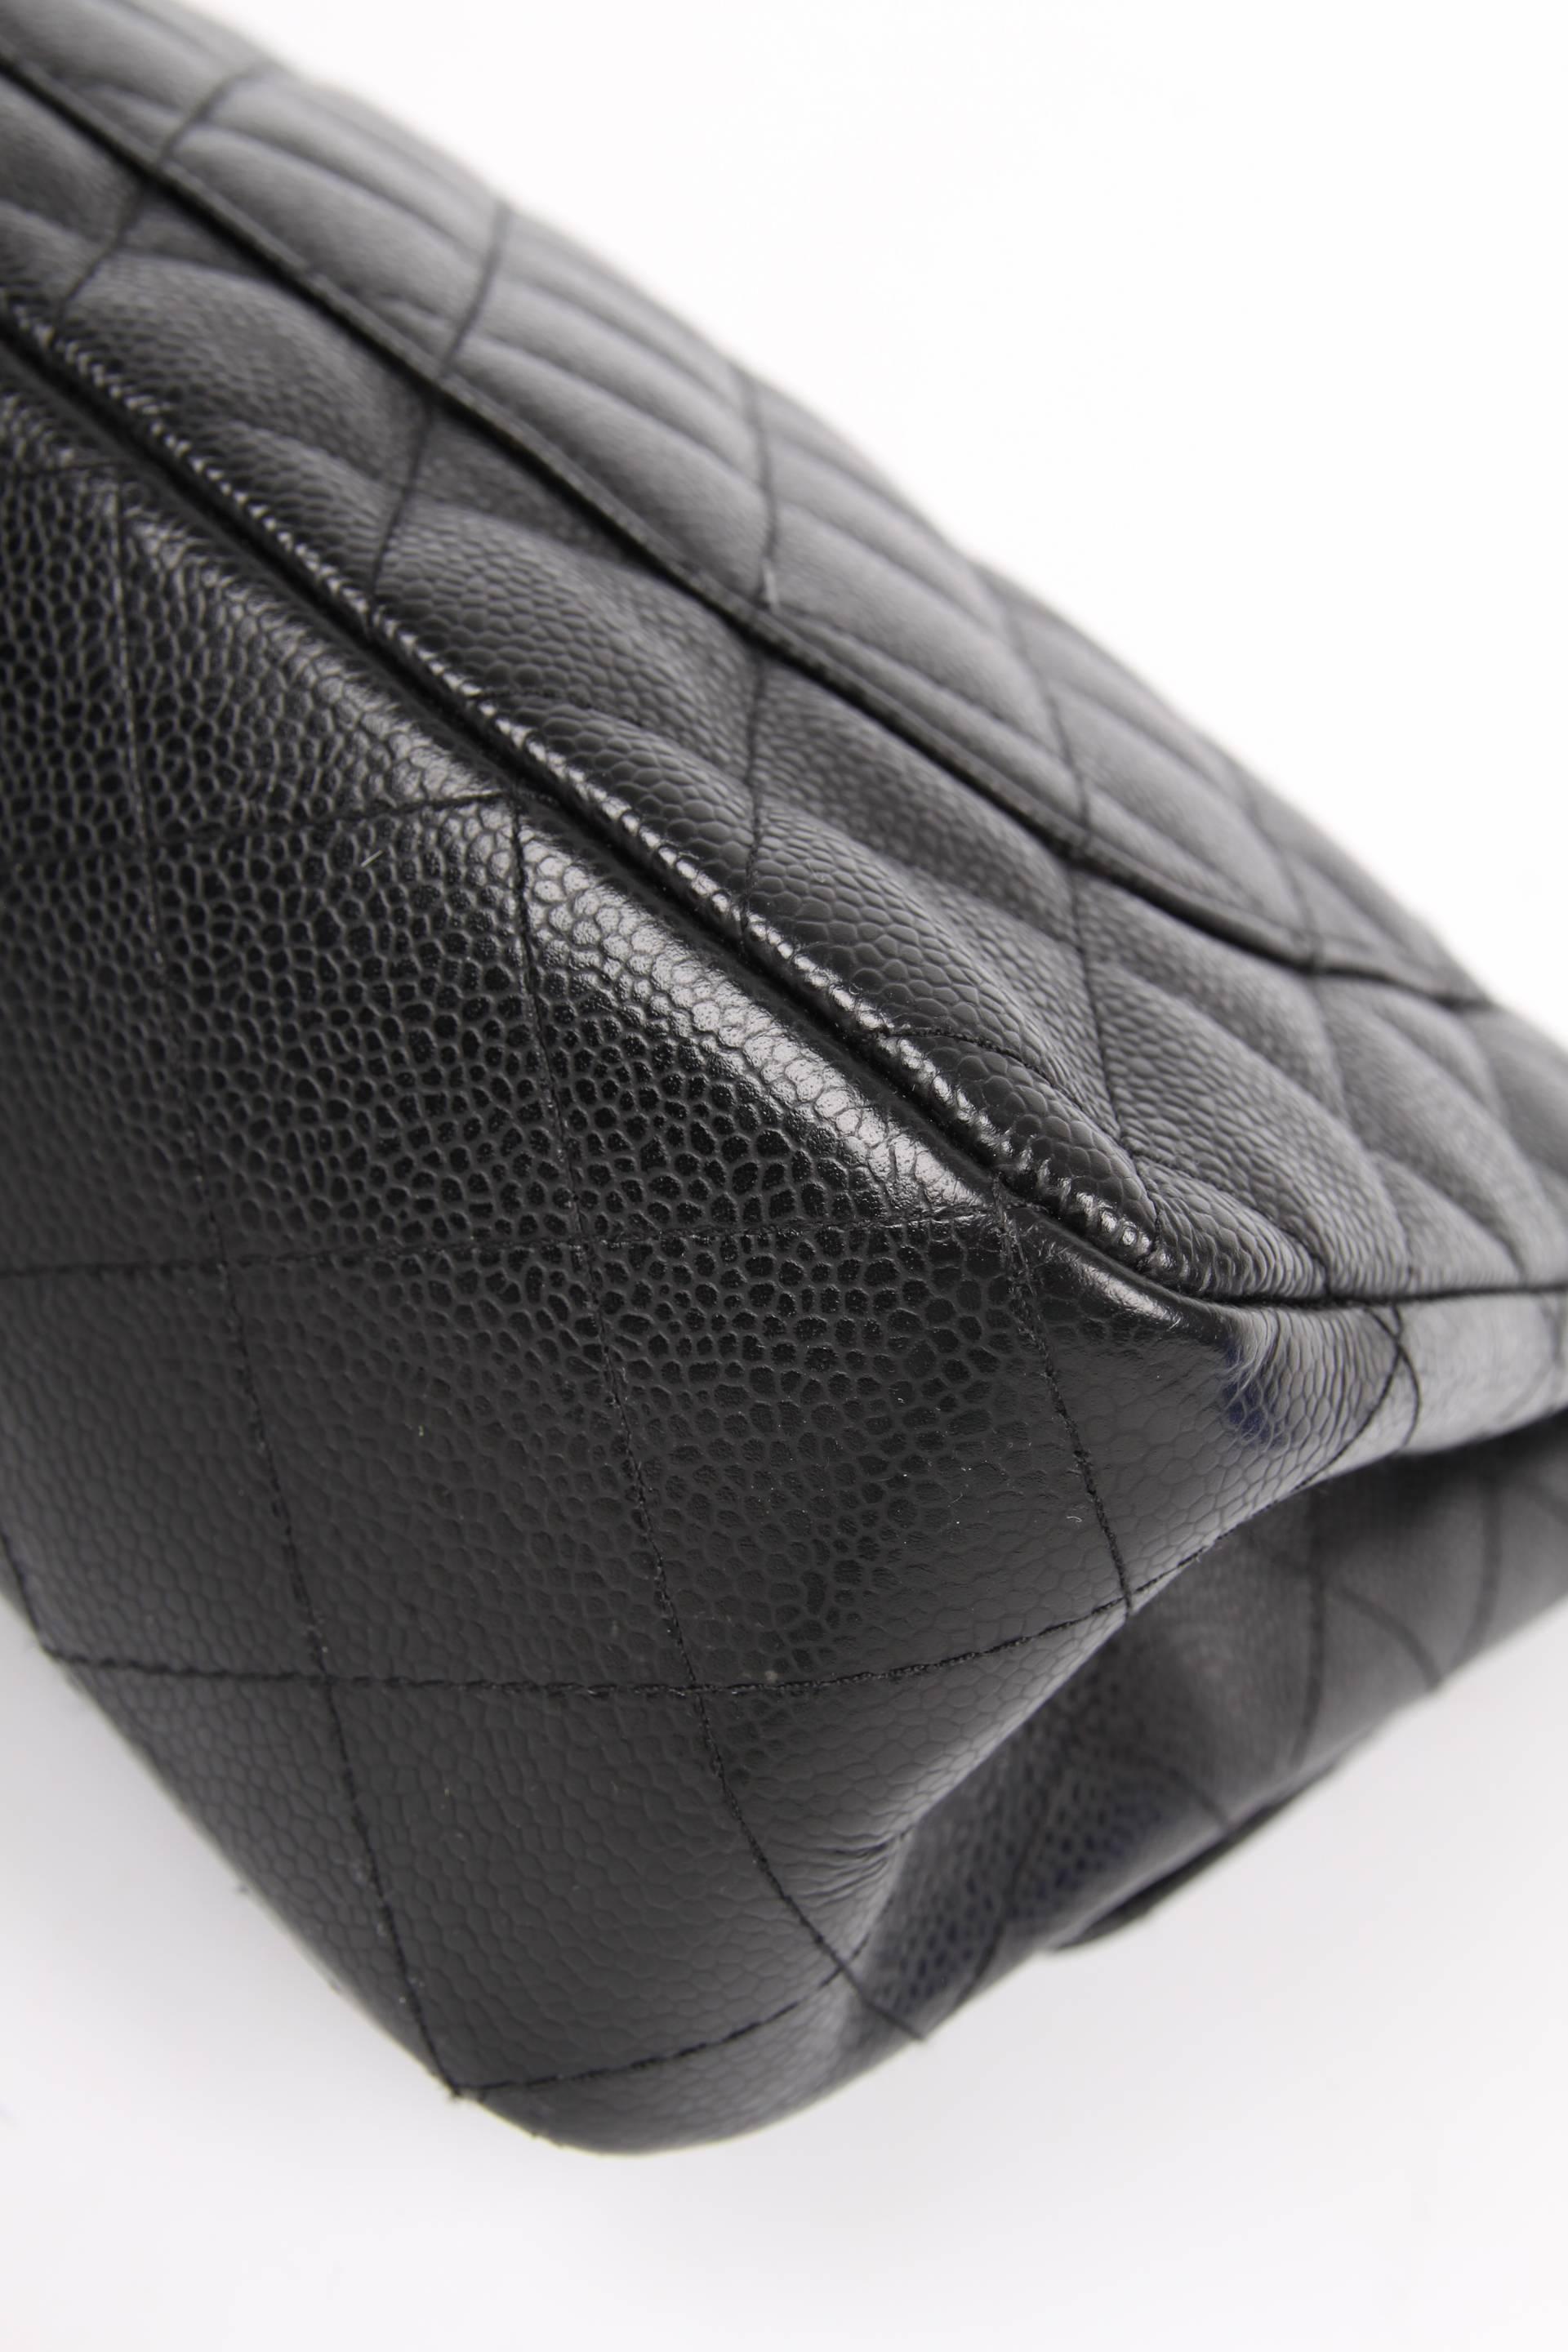 Black Chanel 2.55 Timeless Jumbo Single Flap Bag - black caviar leather/silver